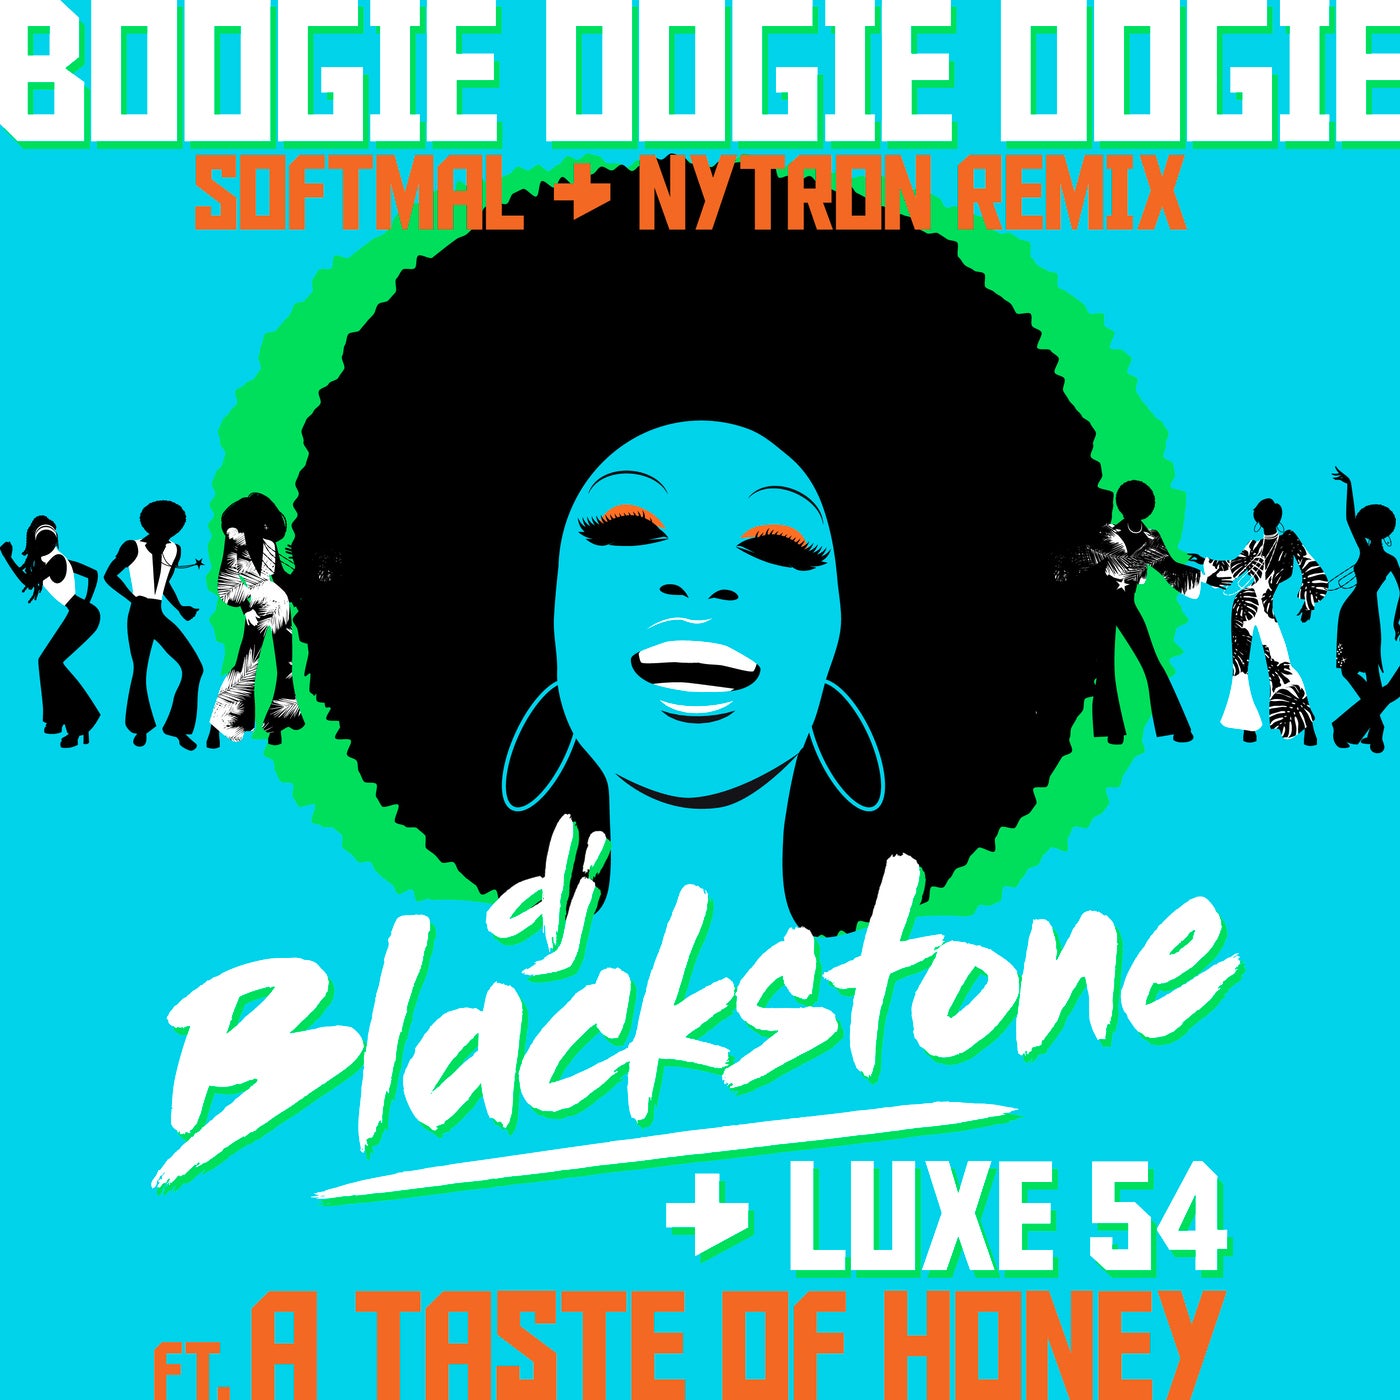 DJ Blackstone - Boogie Oogie Oogie (Softmal & Nytron Remix) [DIG160401]